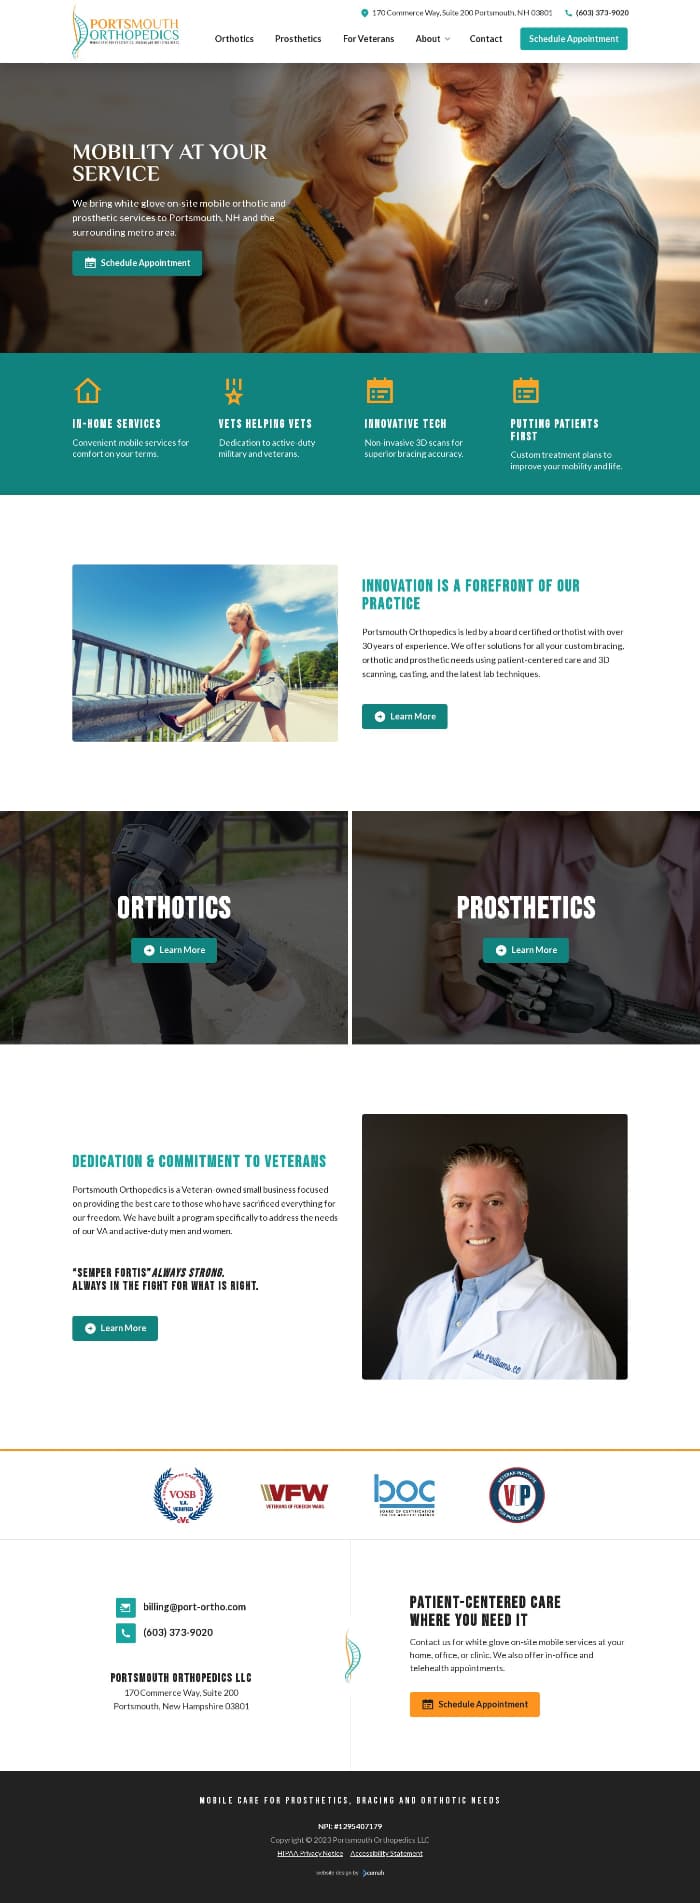 desktop screenshot of Portsmouth Orthopedics website homepage